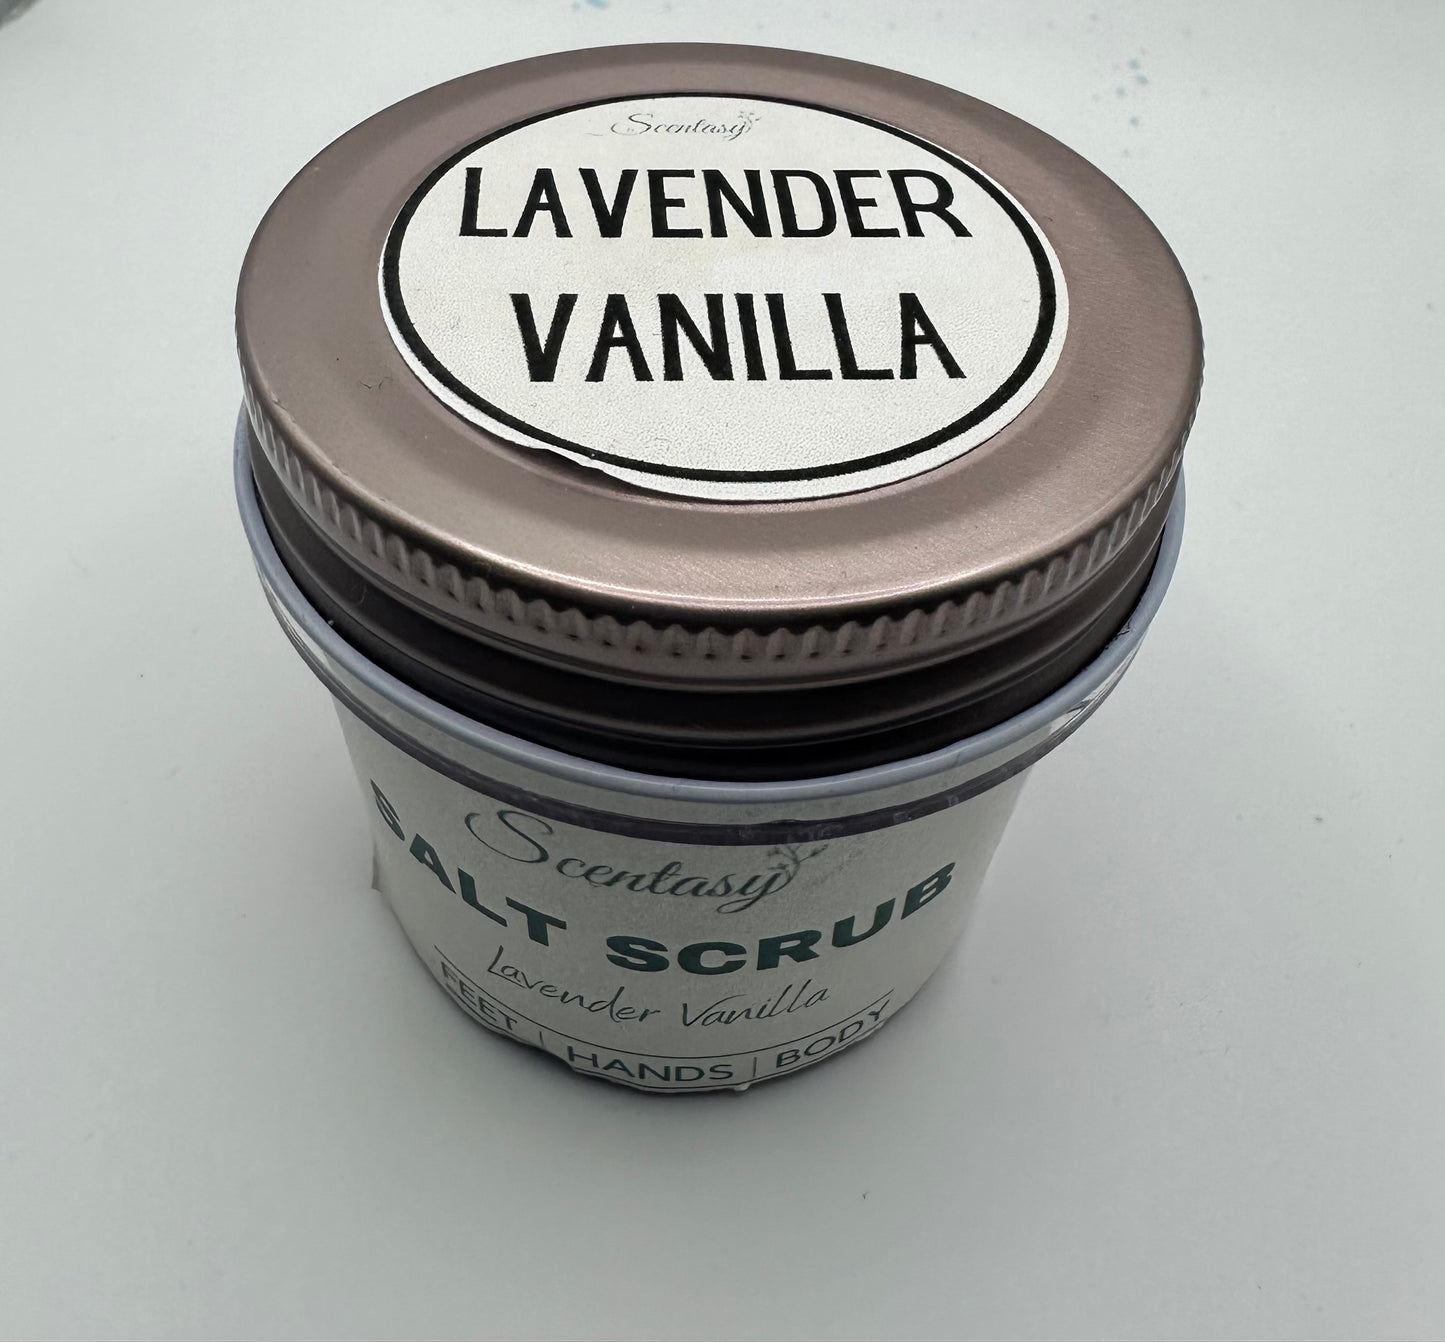 Lavender Vanilla Salt Scrub